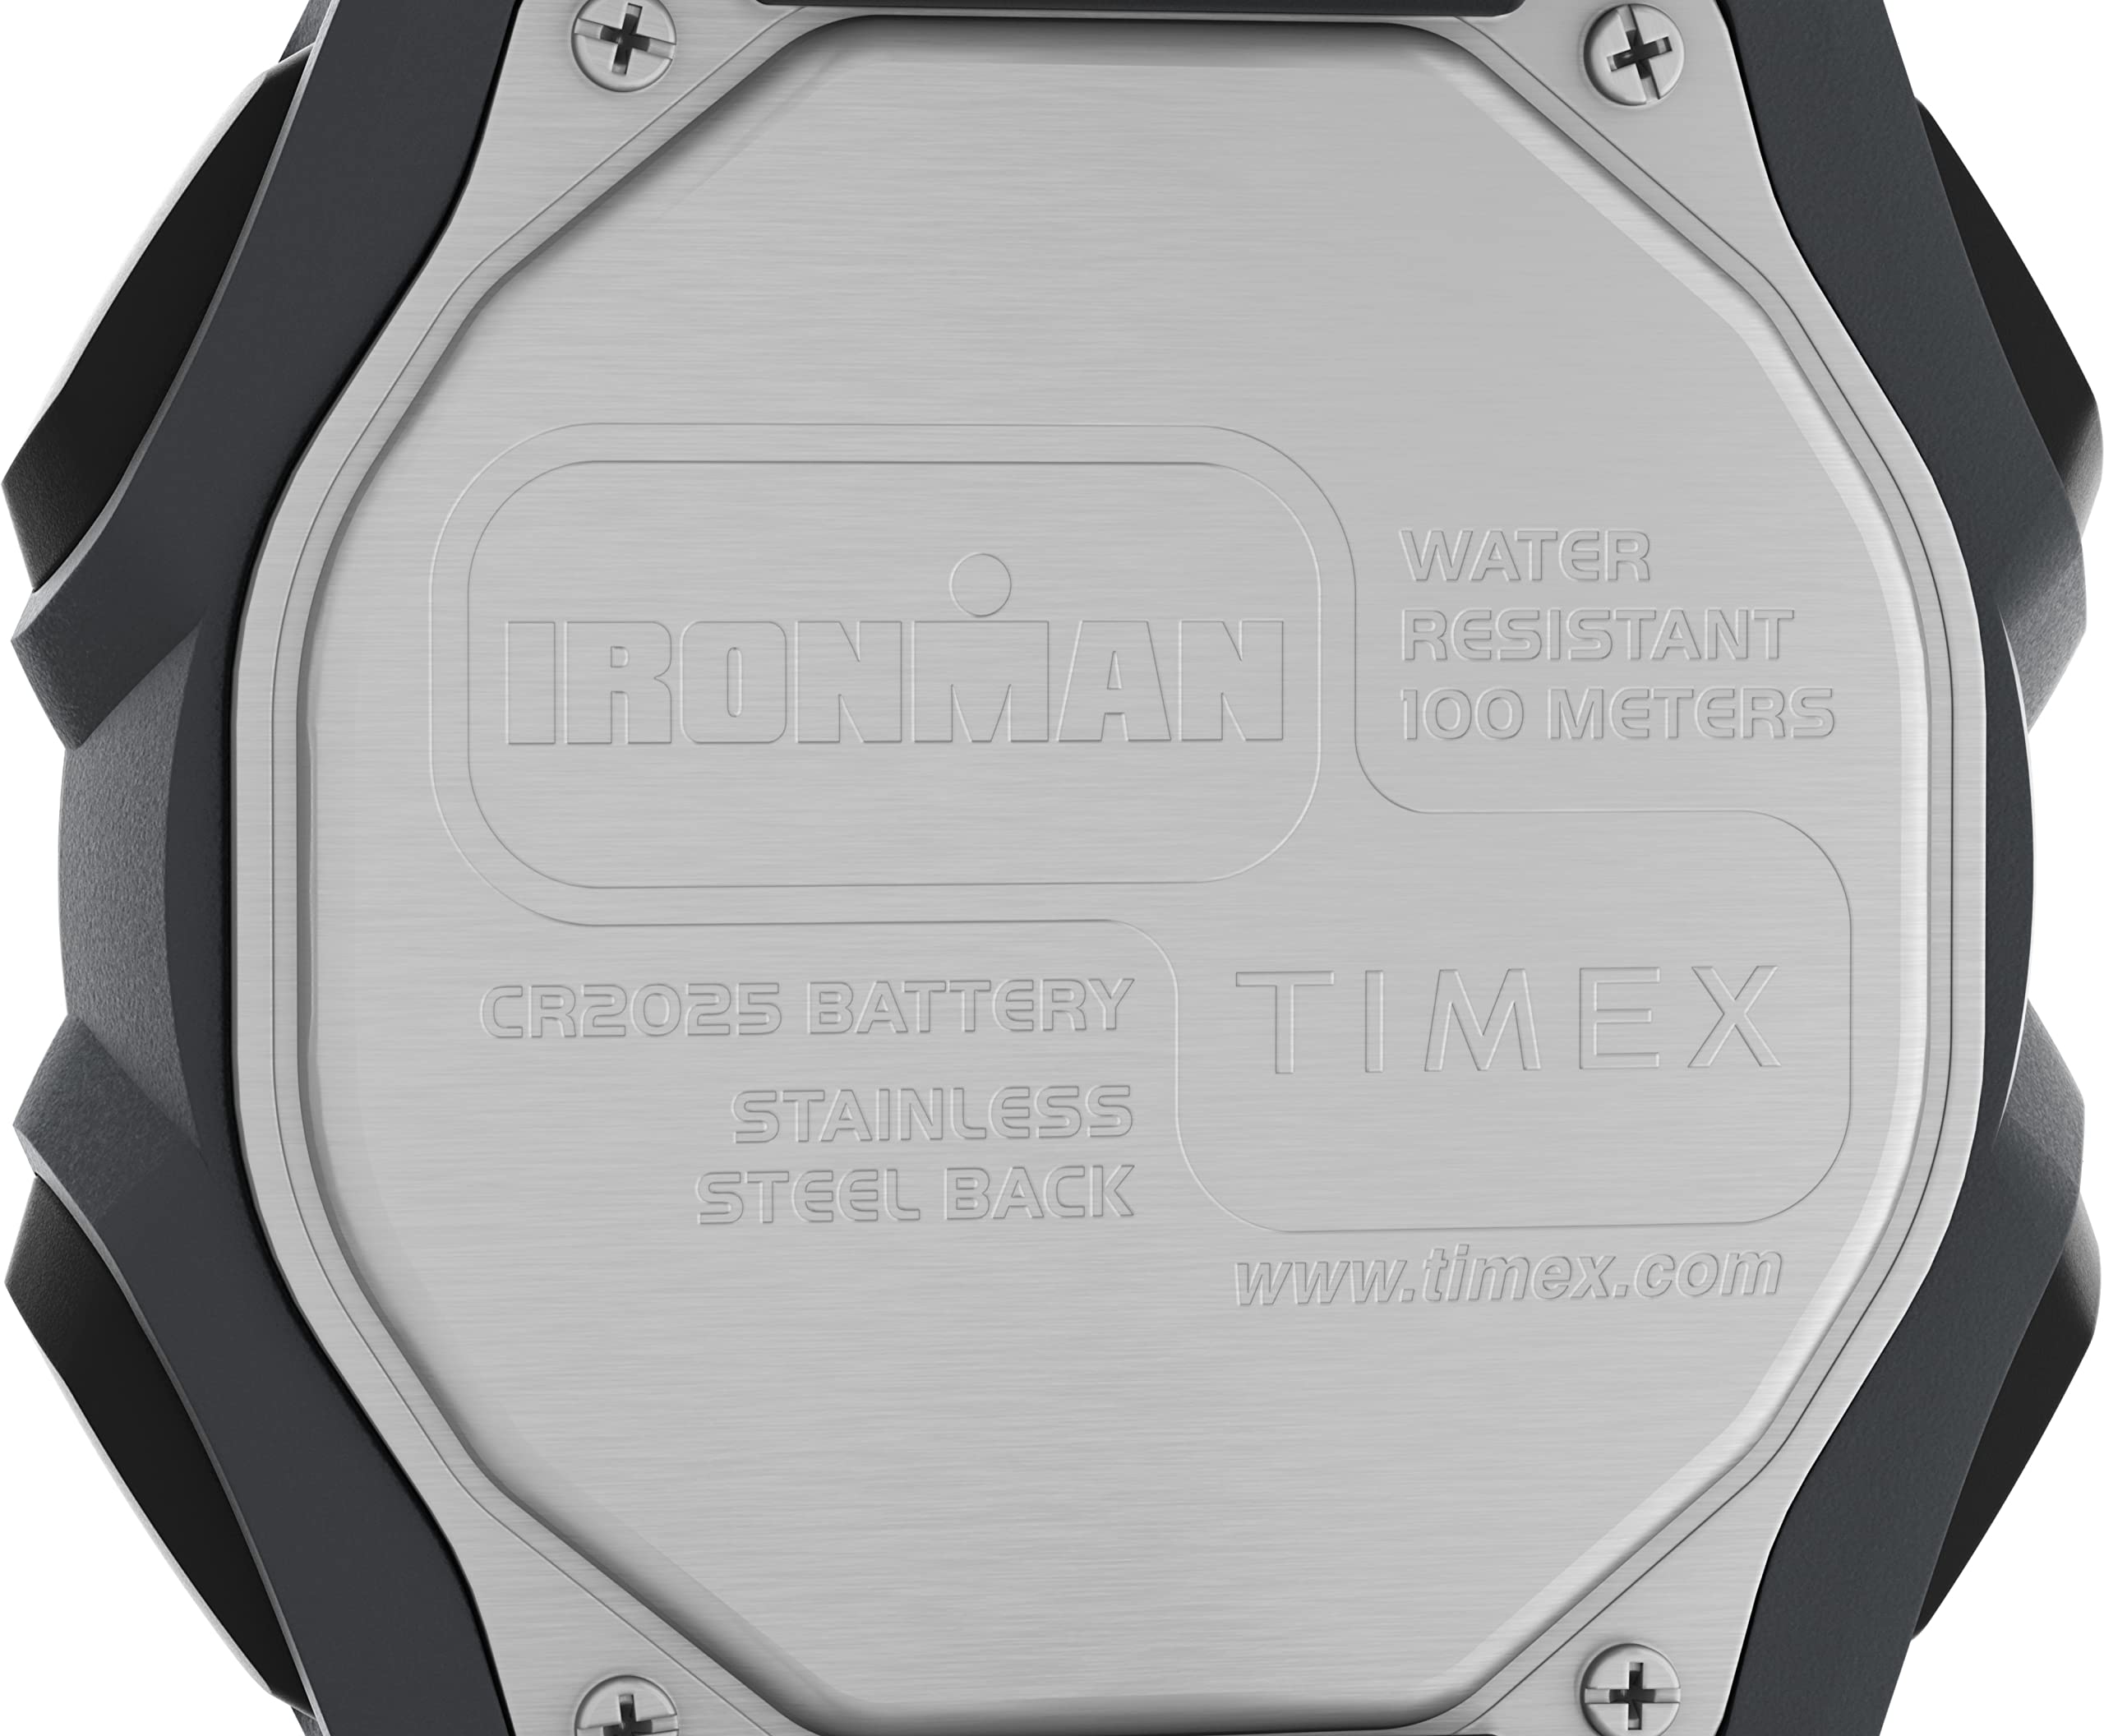 Timex Ironman Classic 30 Oversized 43mm Watch